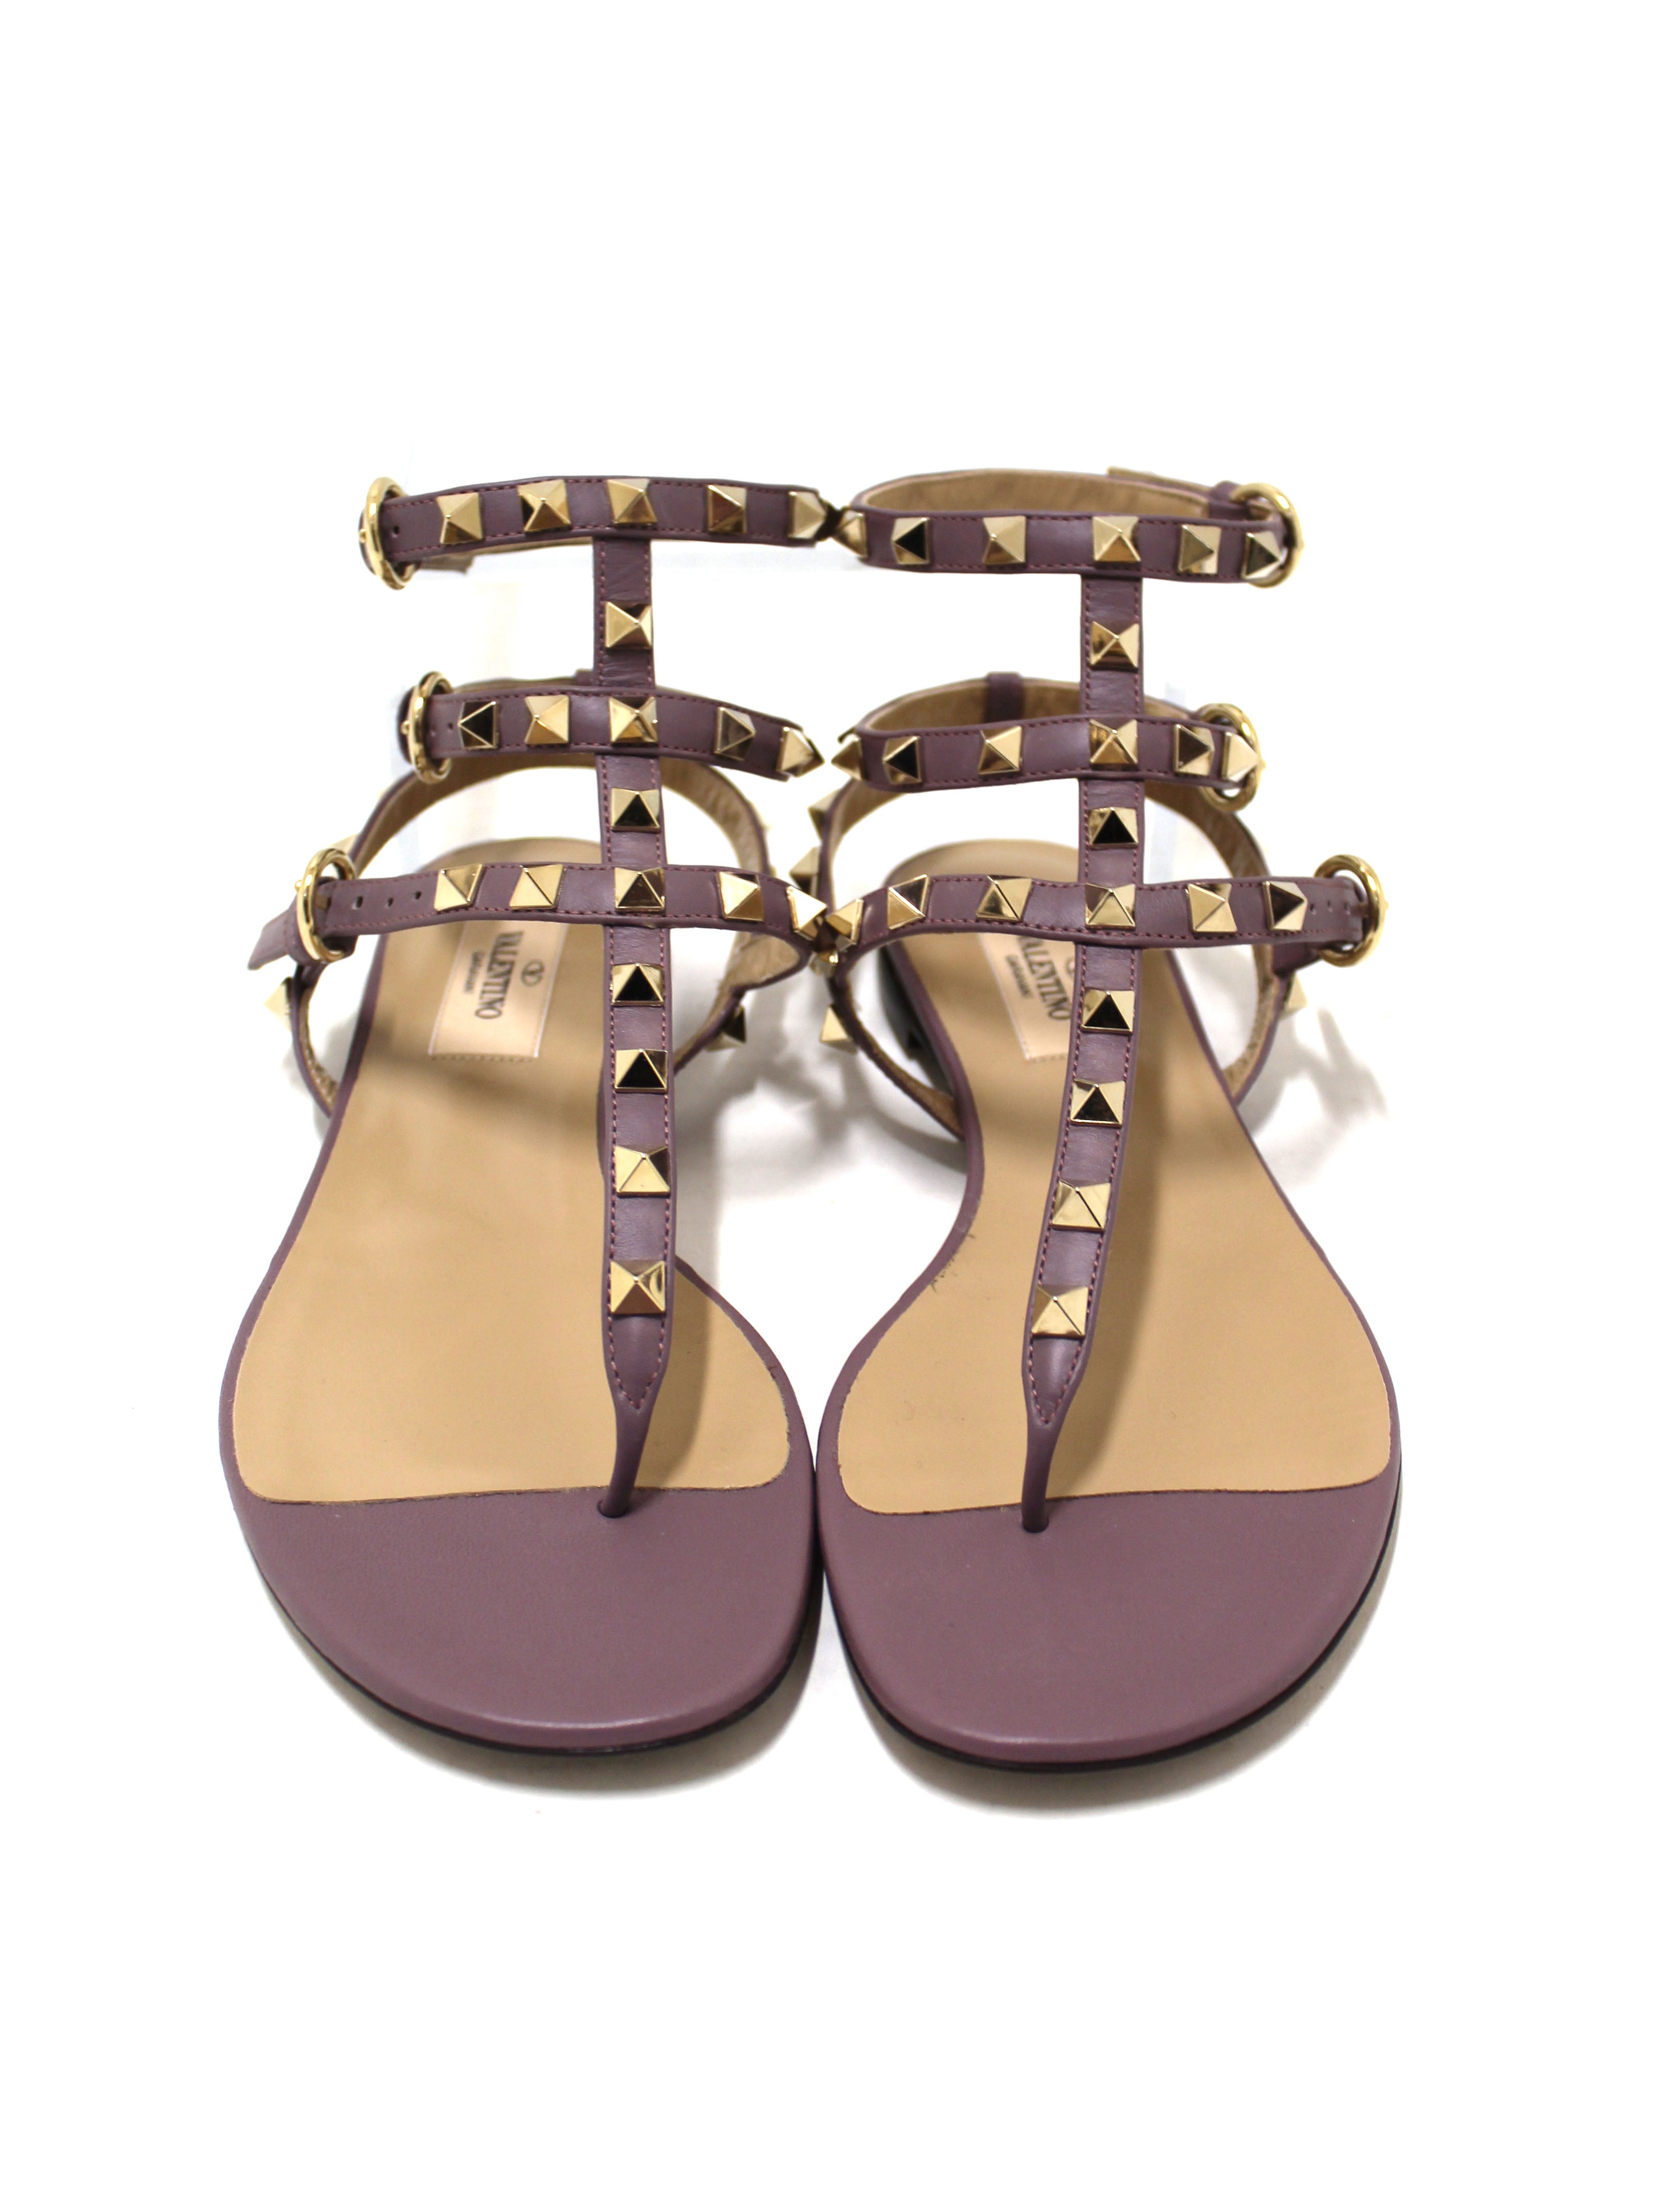 Authentic New Valentino Purple Leather Rockstud Flip Flop Sandal Shoes Size 36